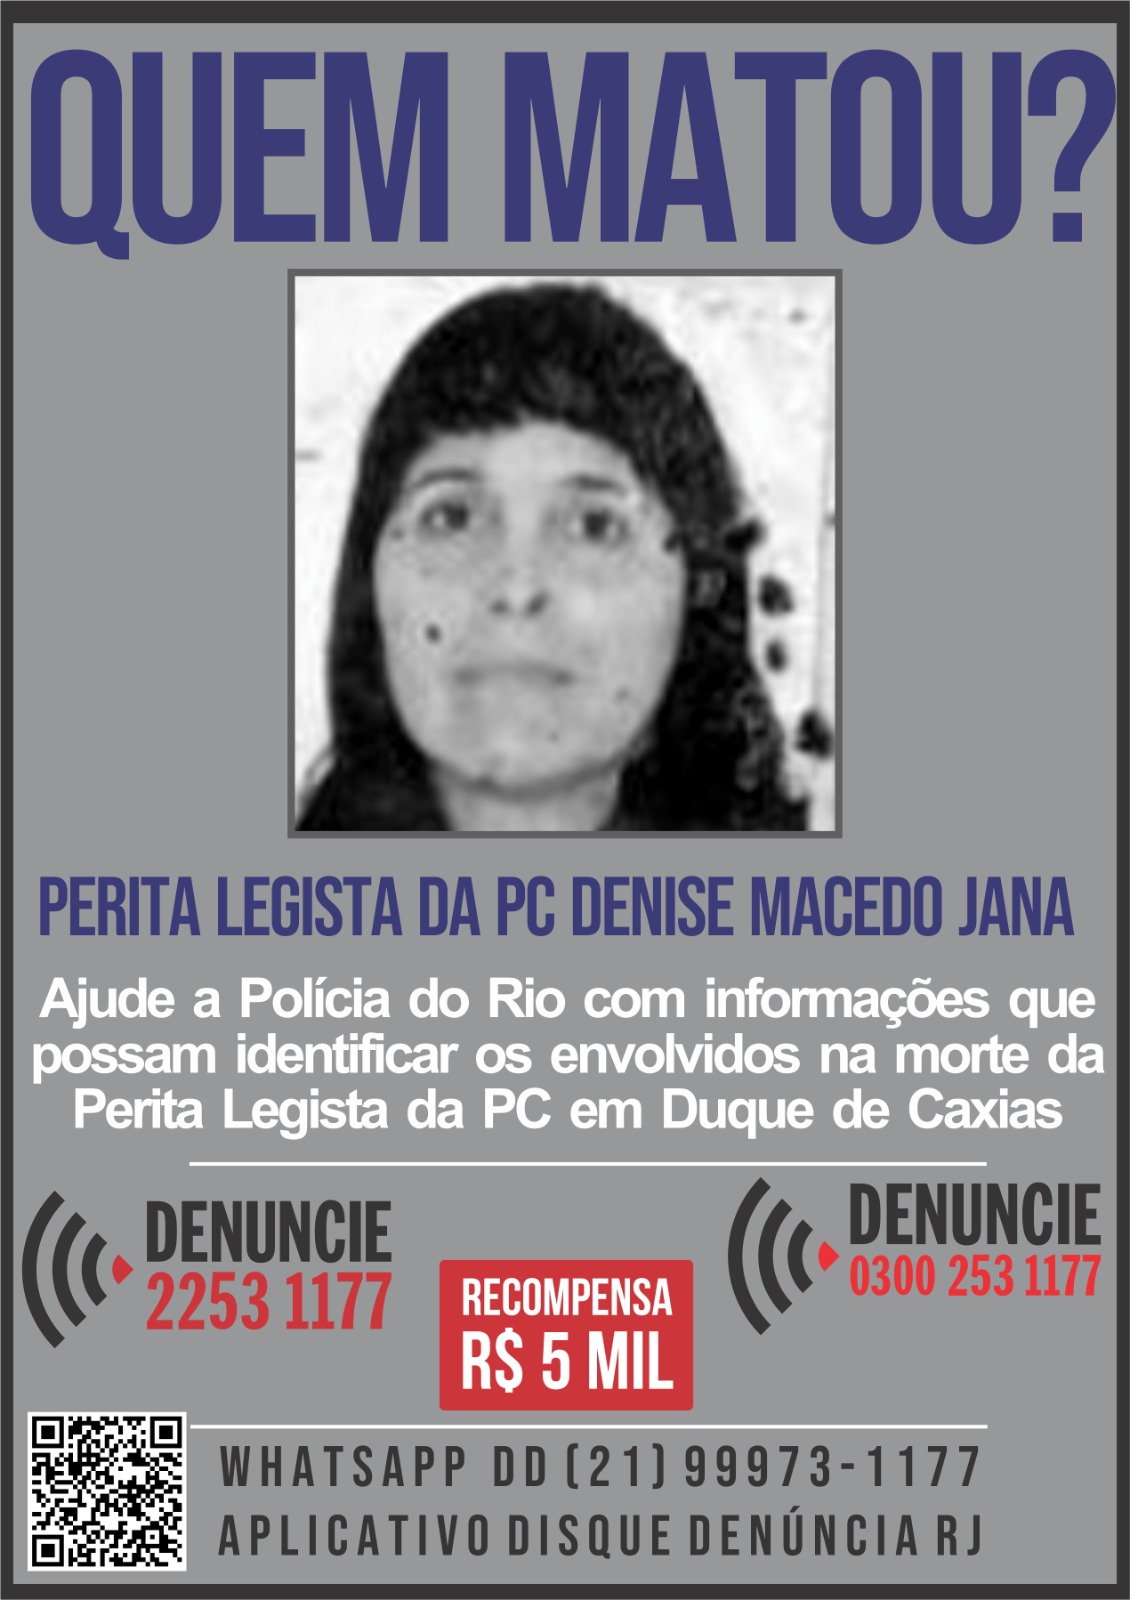 Disque Denúncia pede informações sobre os envolvidos na morte da perita legista, na Baixada Fluminense